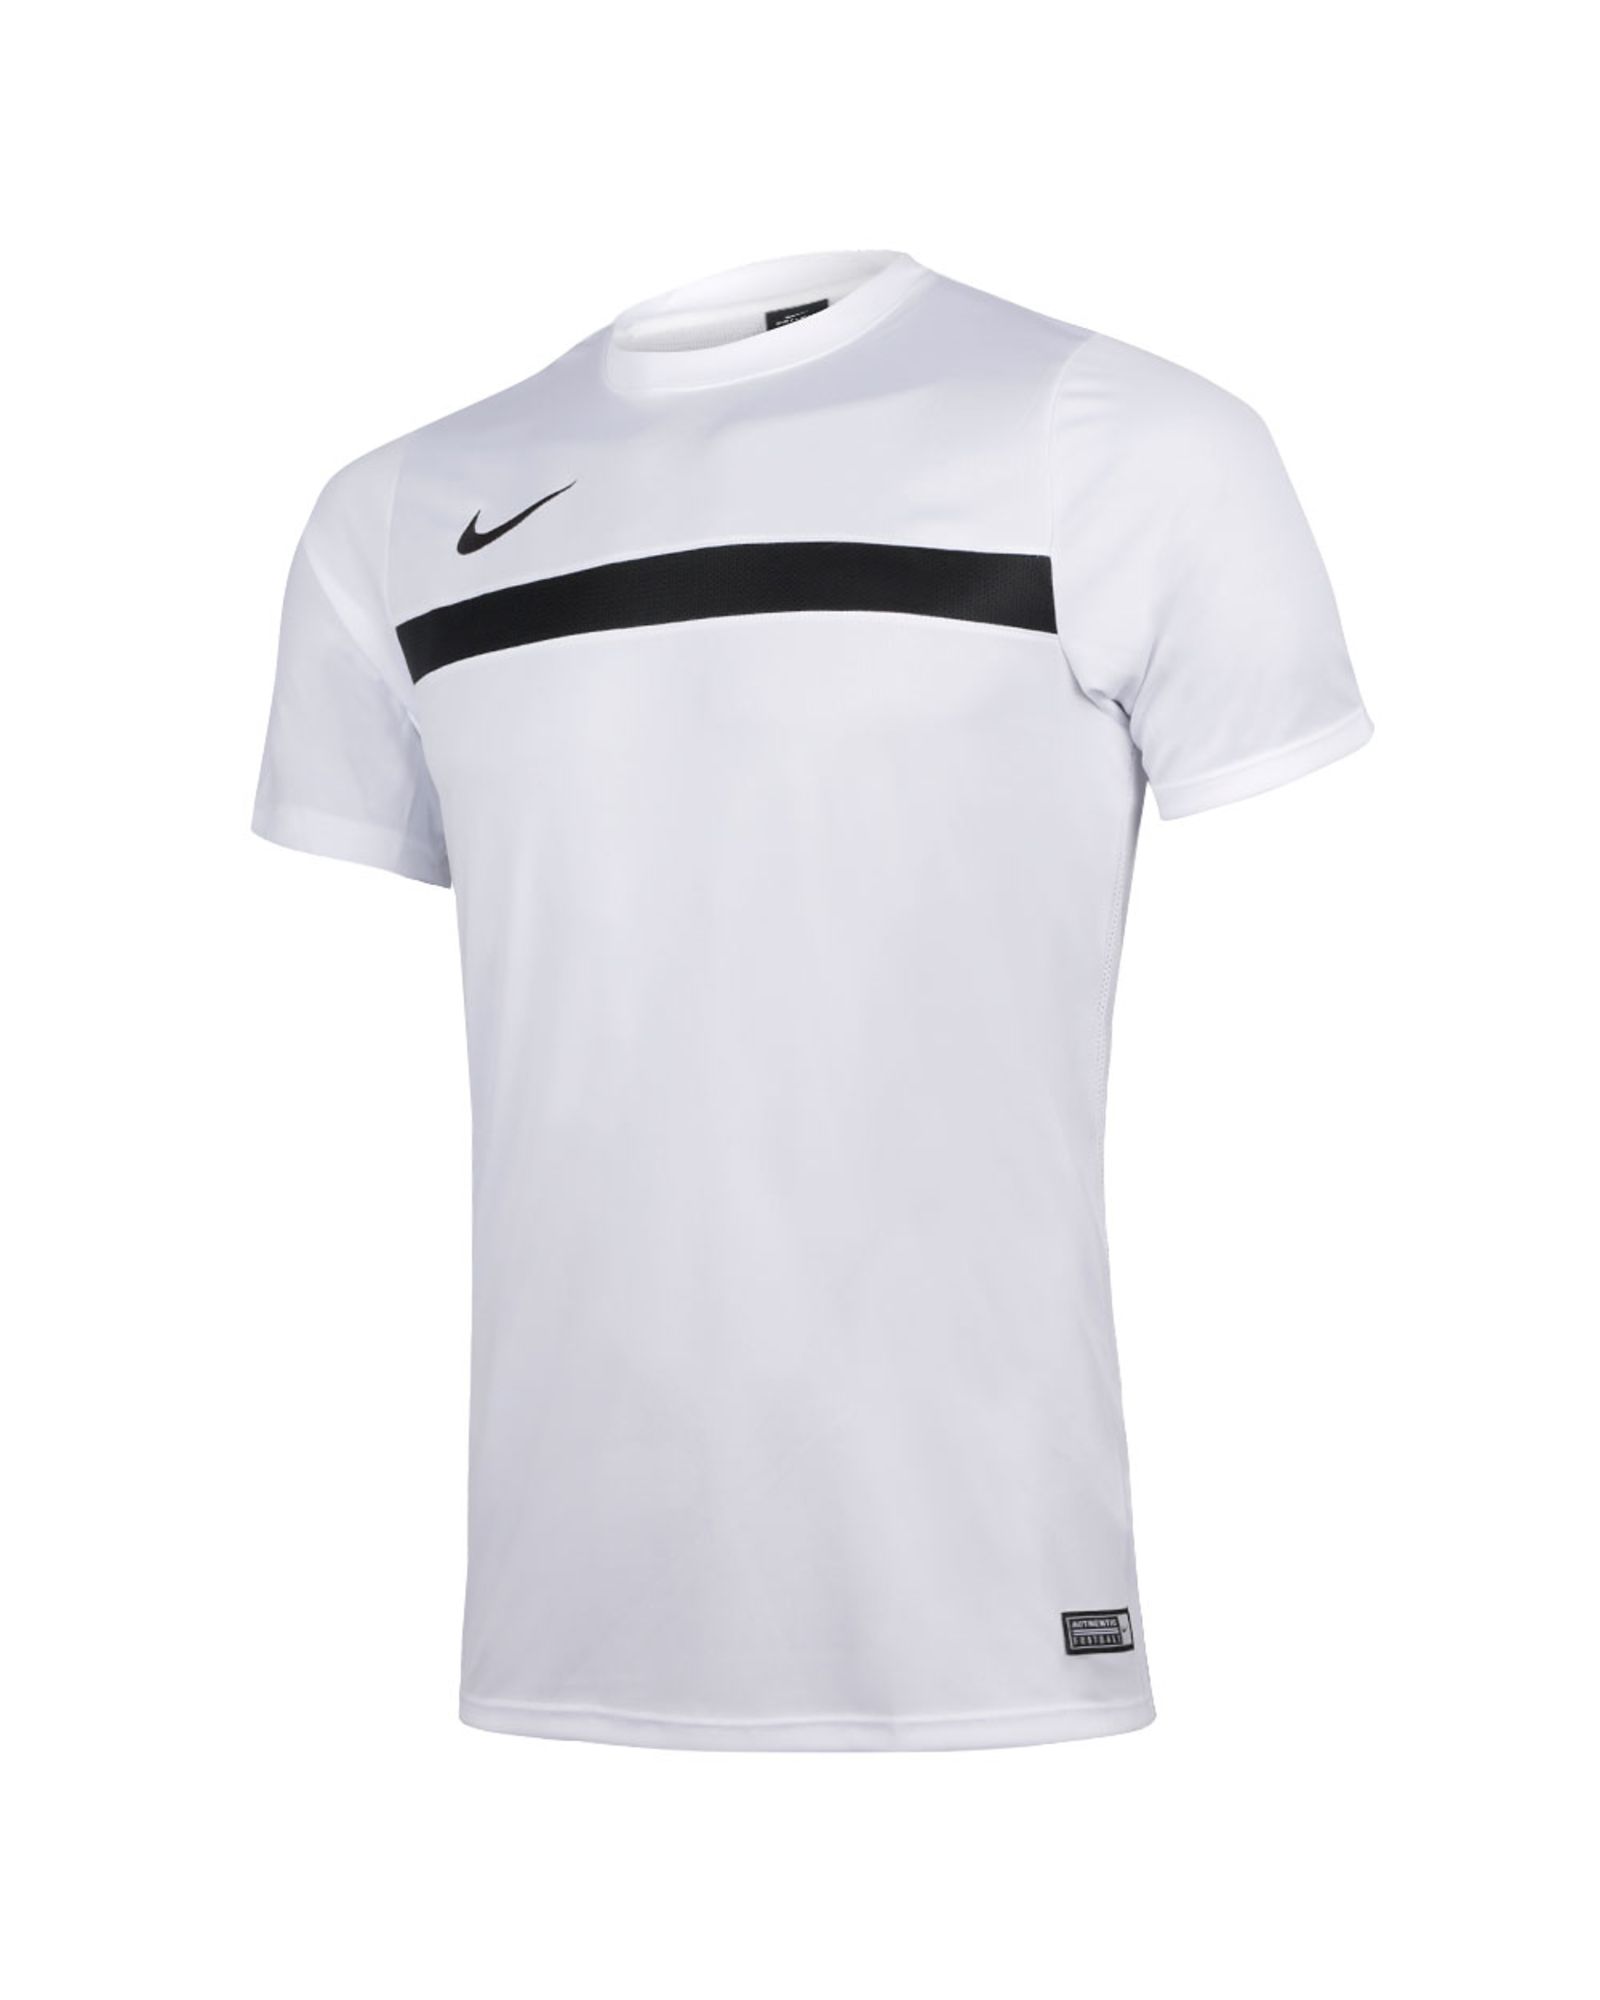 Camiseta Academy 16 Blanco - Fútbol Factory